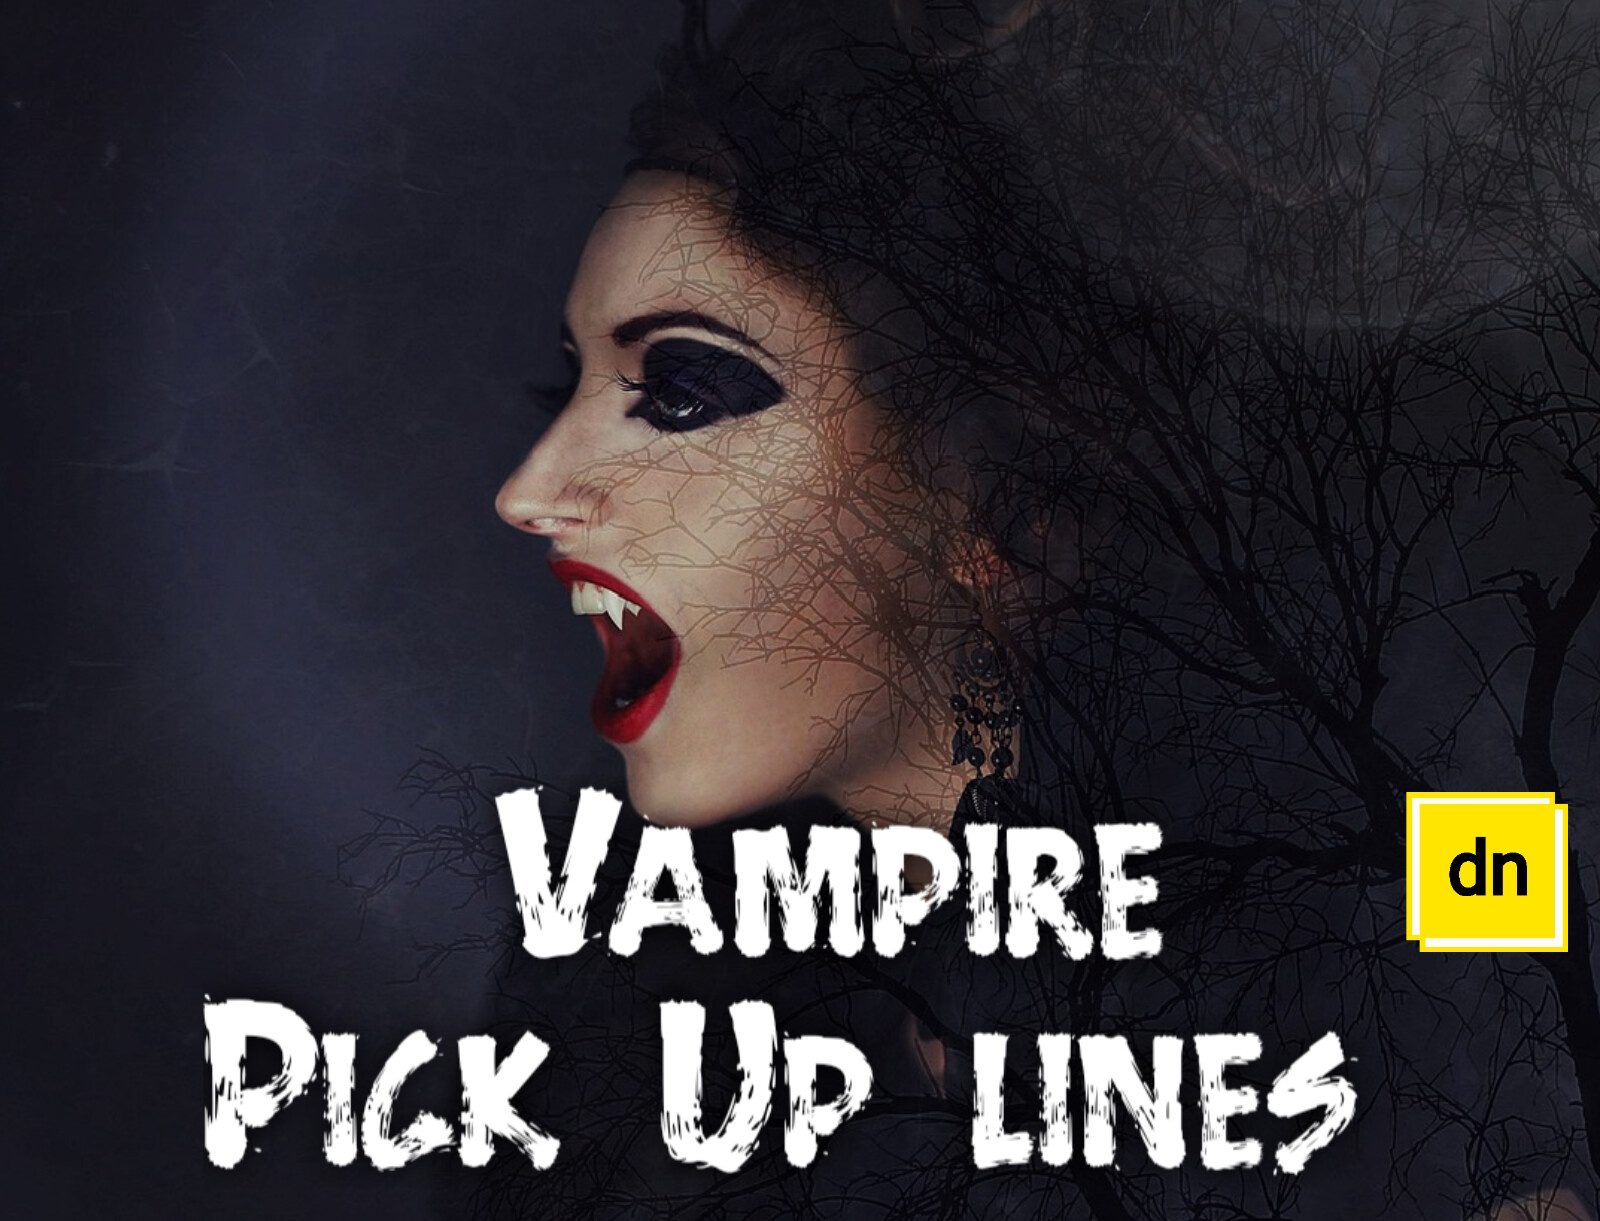 Vampire pick up lines